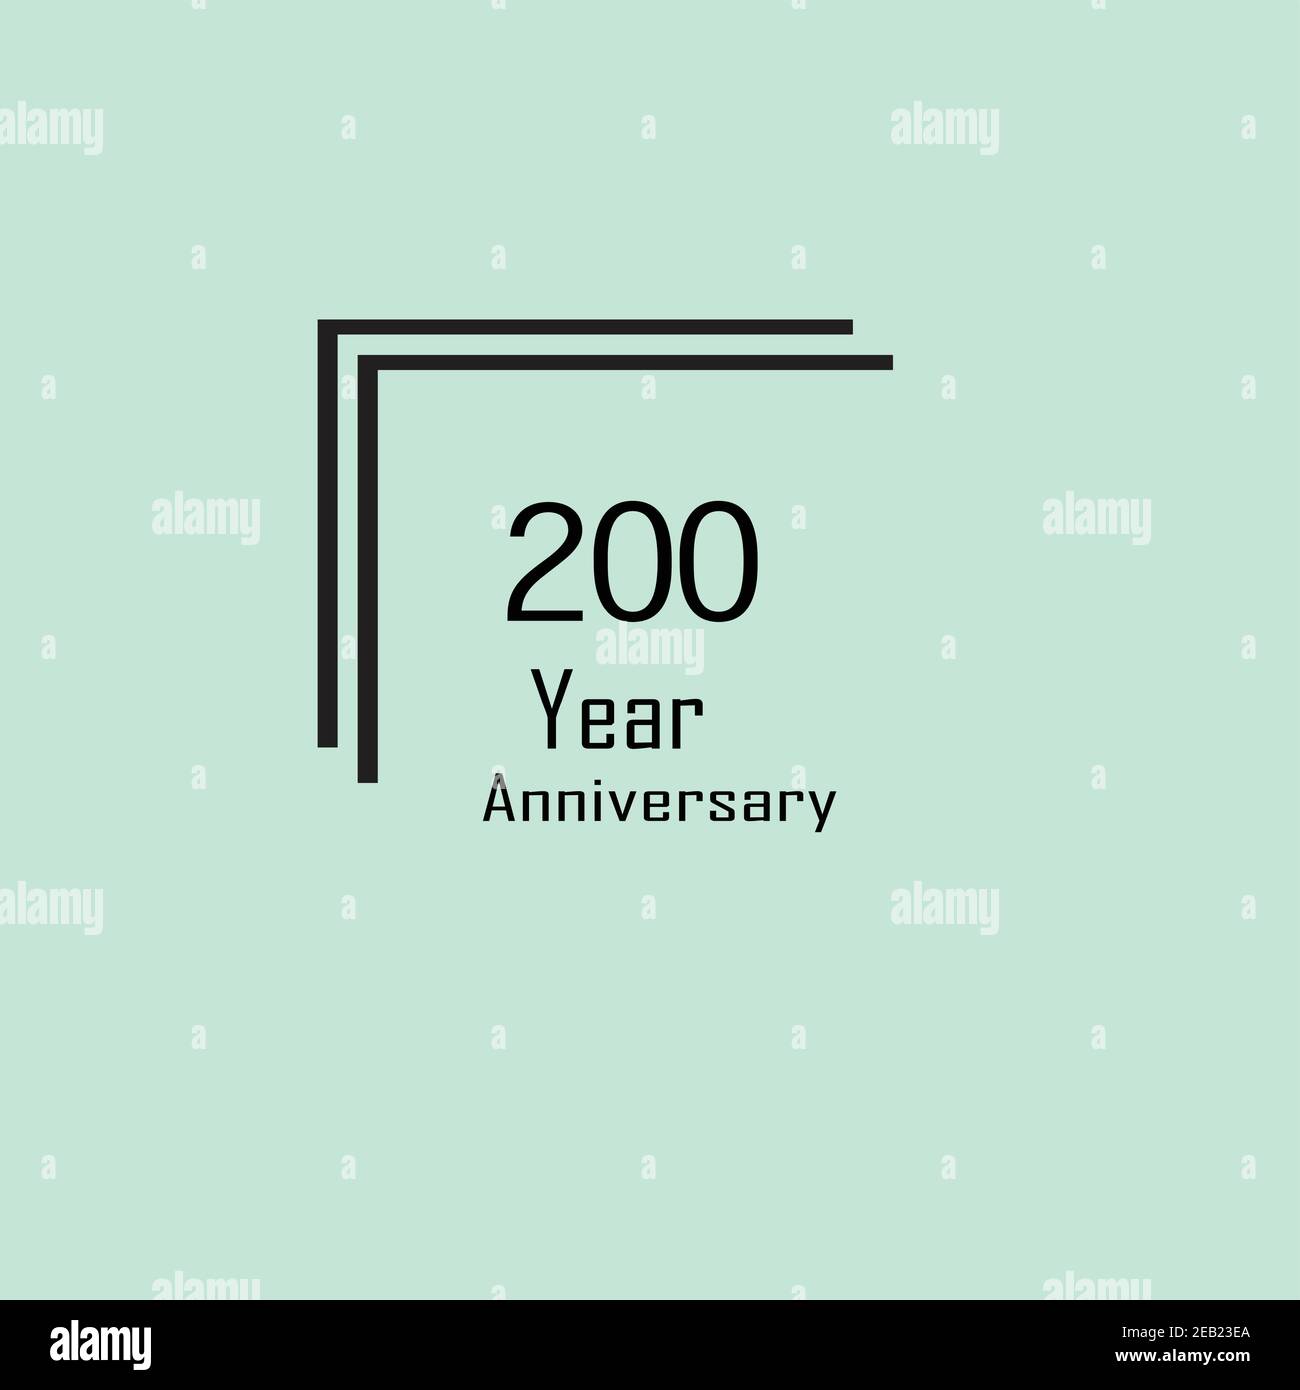 200 Anniversary celebration. Vector festive illustration. Stock Vector